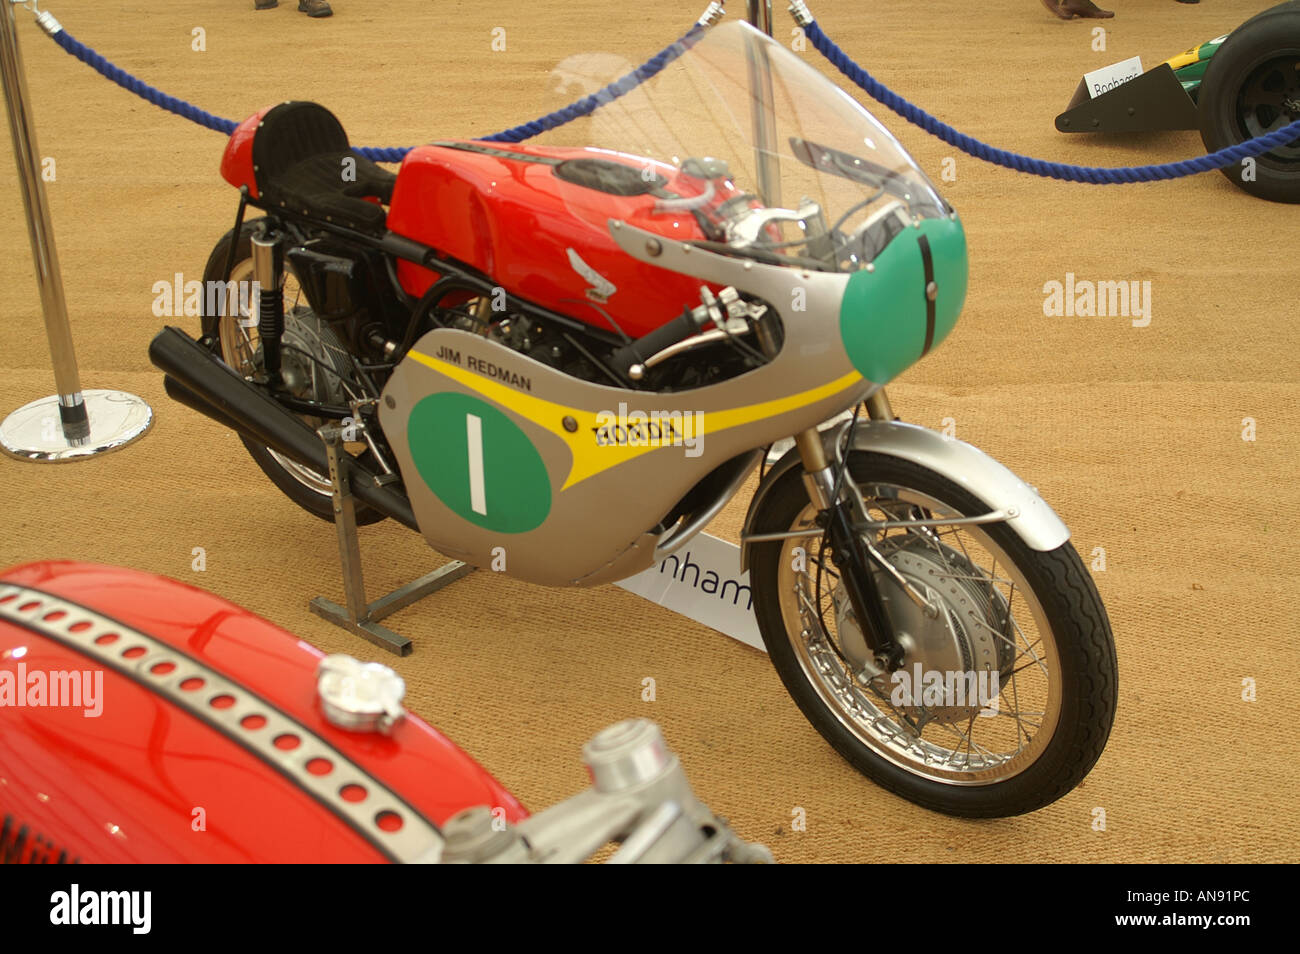 The Jim Redman ex-works 1964 Honda 250cc RC164 motorcycle gift of Mr Takahashi Stock Photo